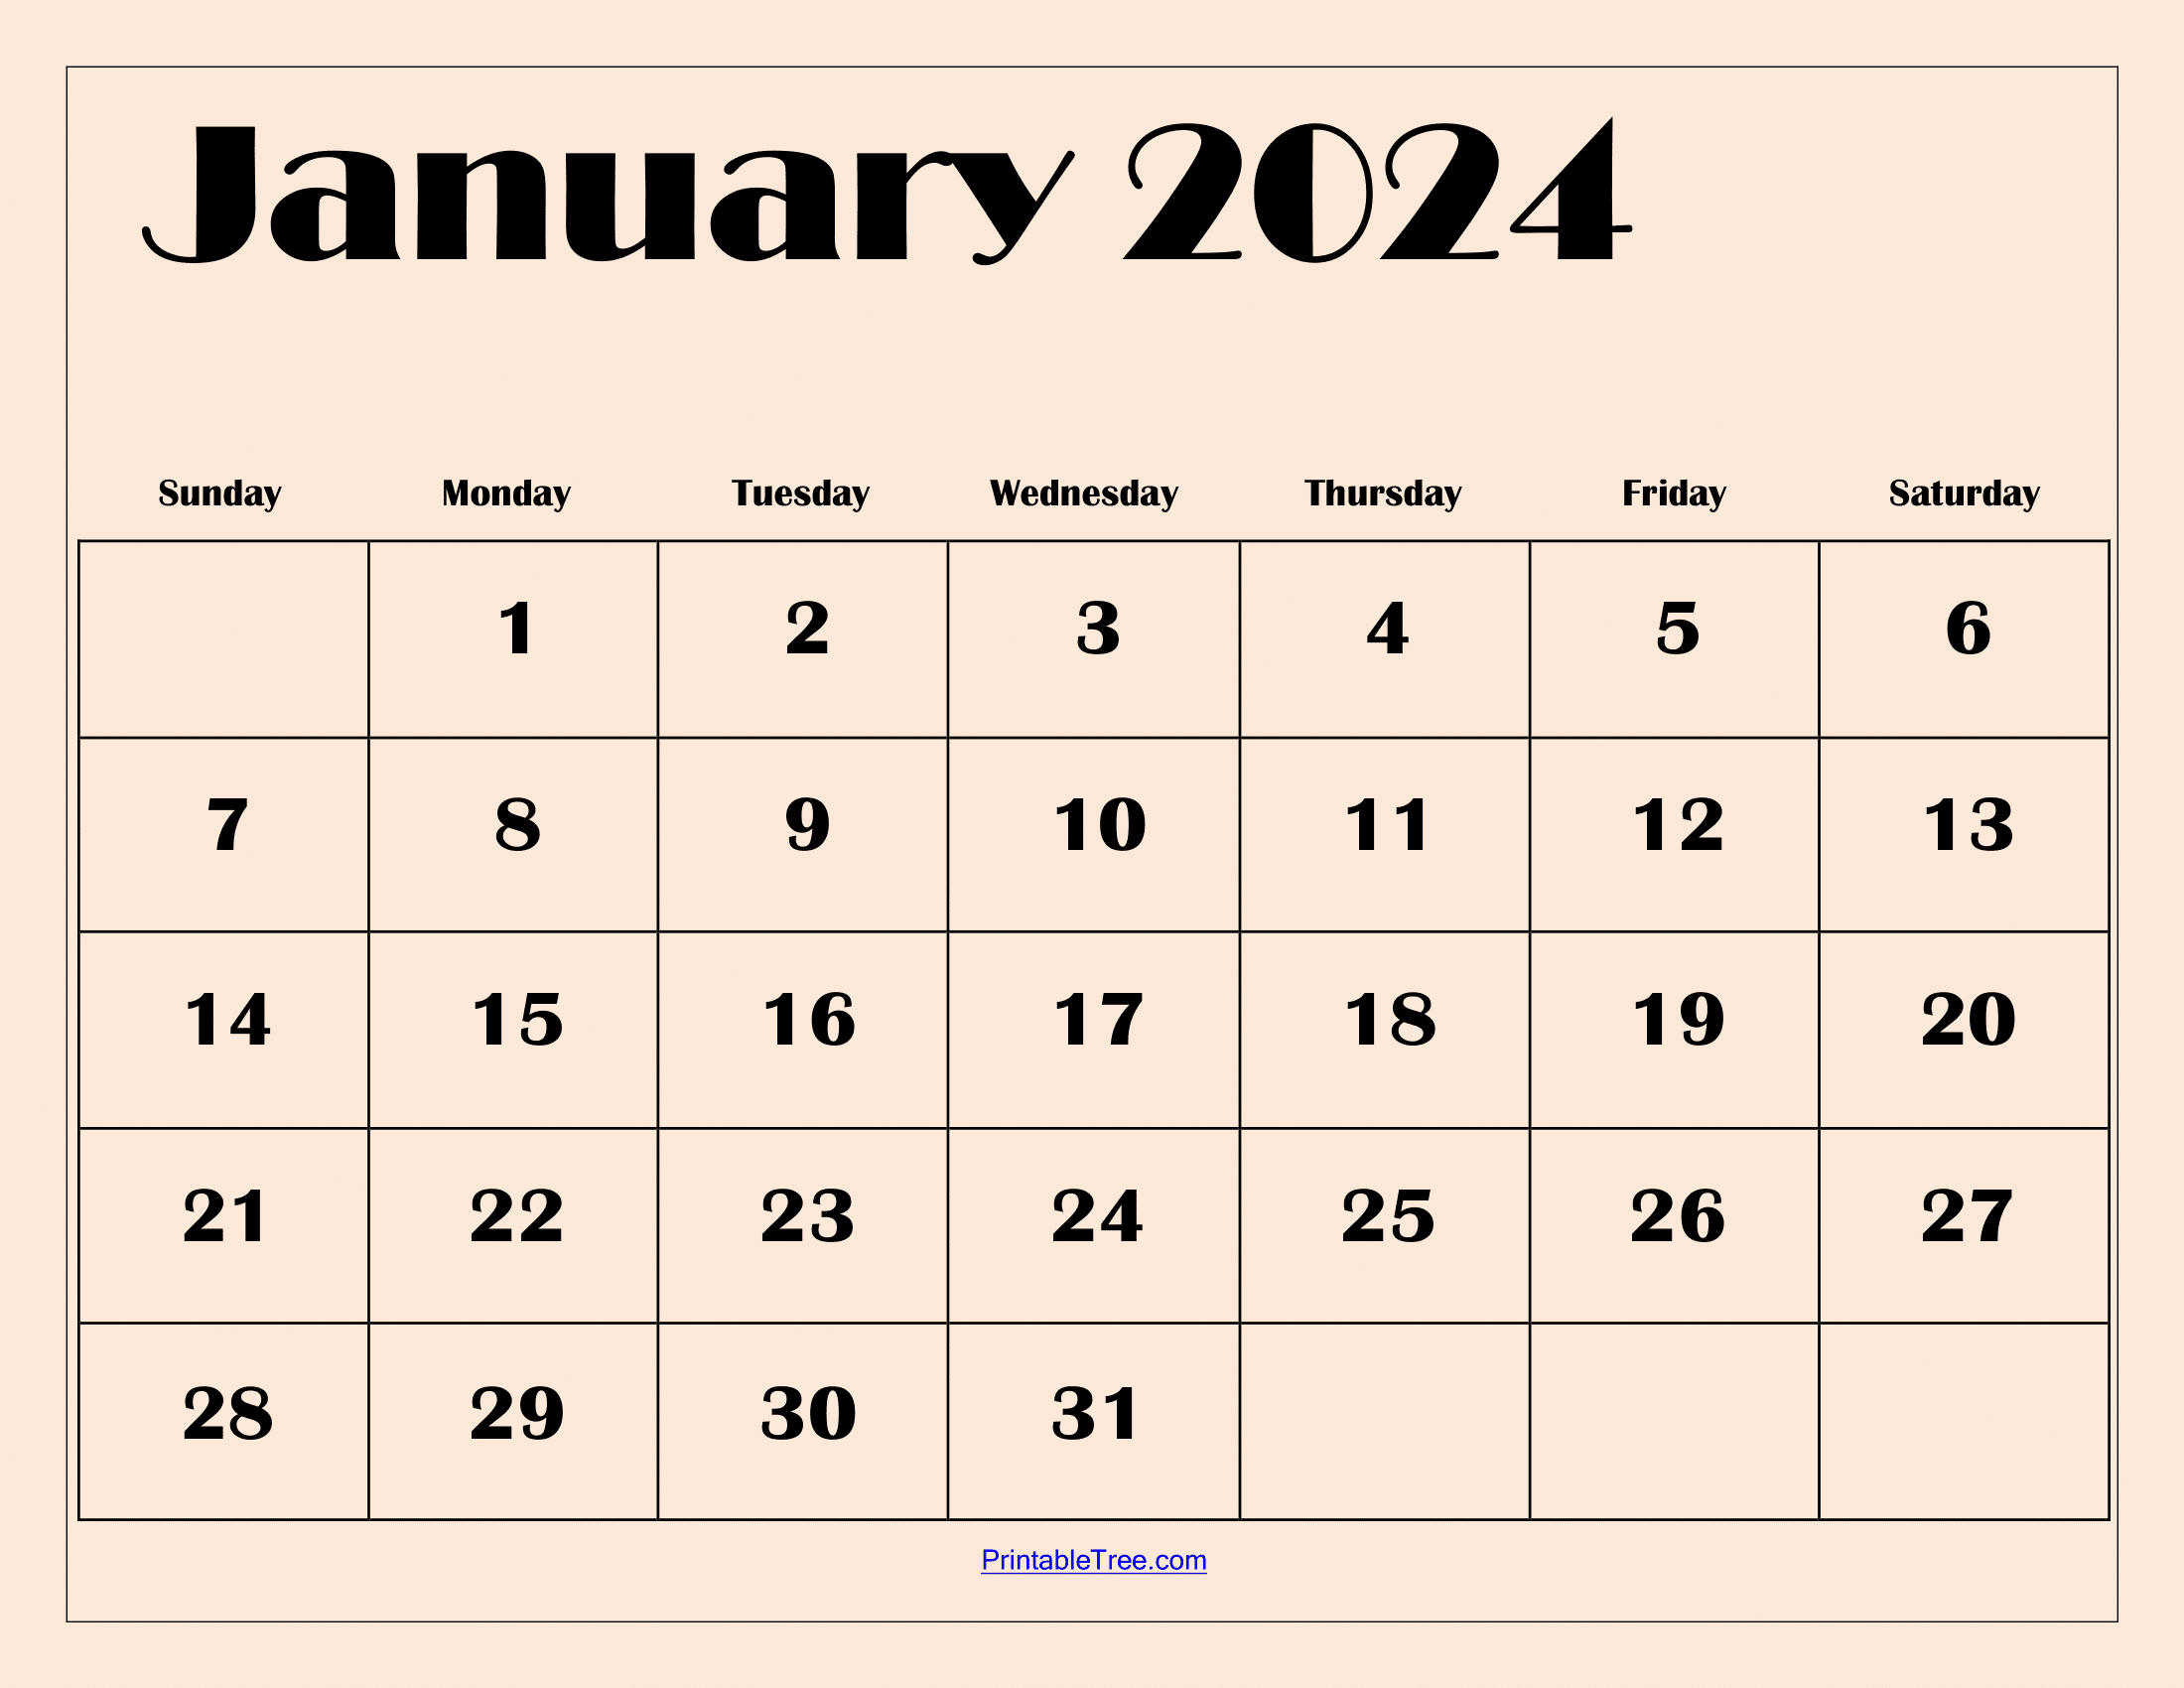 January 2024 Calendar Printable Pdf Template With Holidays for Cute Printable January 2024 Calendar